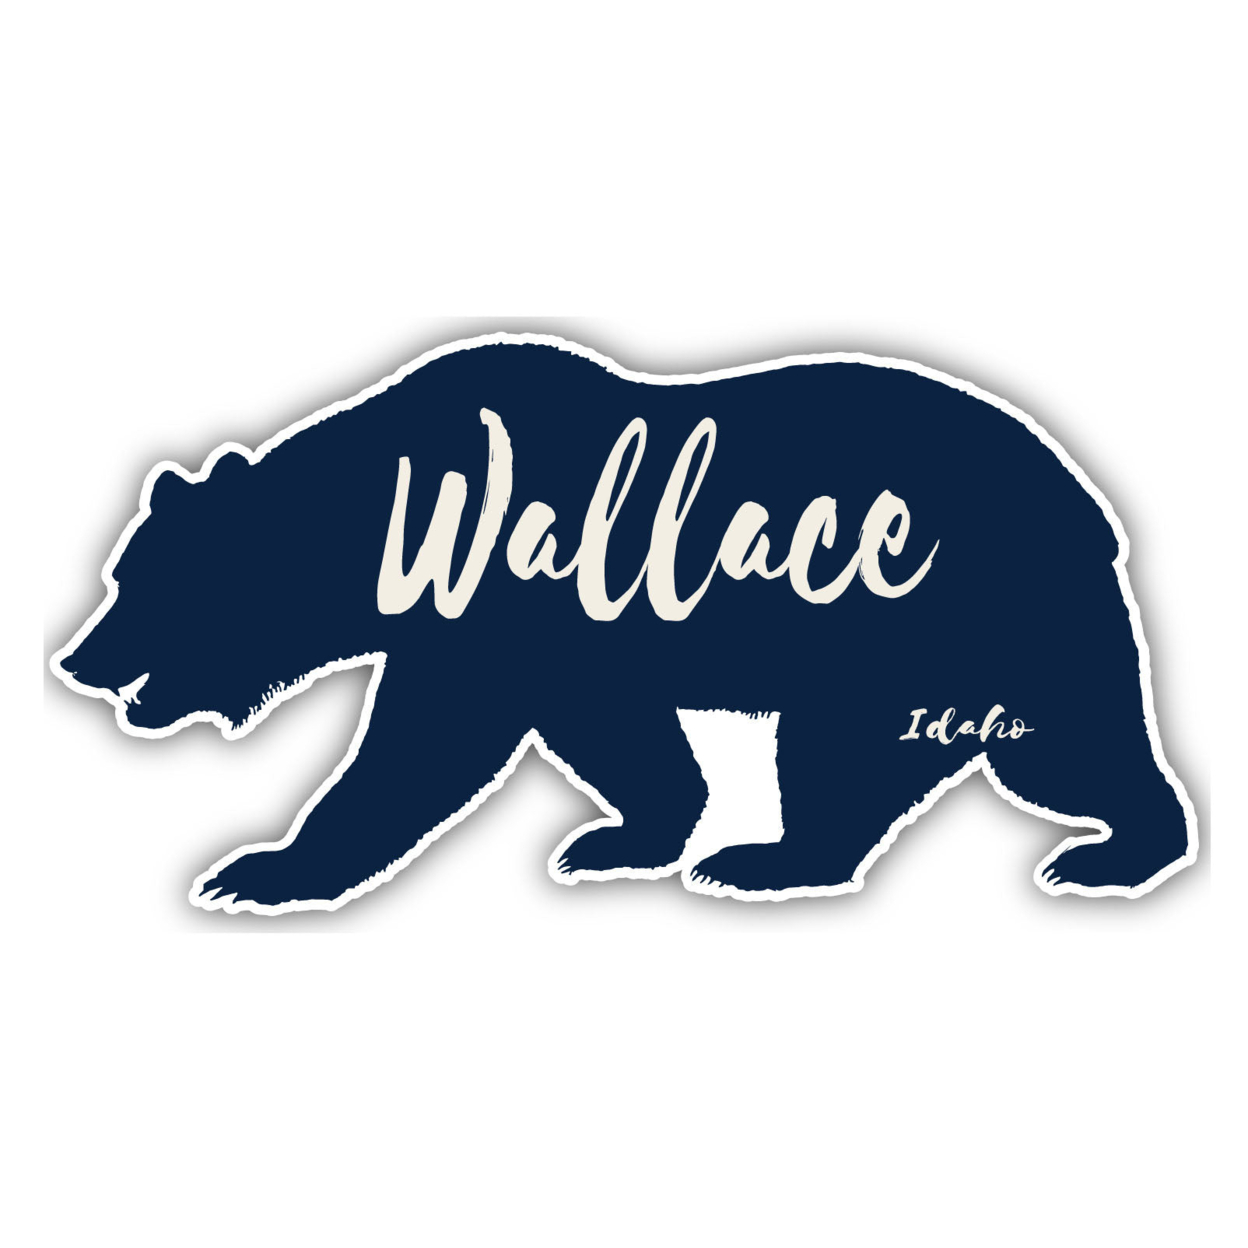 Wallace Idaho Souvenir Decorative Stickers (Choose Theme And Size) - Single Unit, 4-Inch, Bear